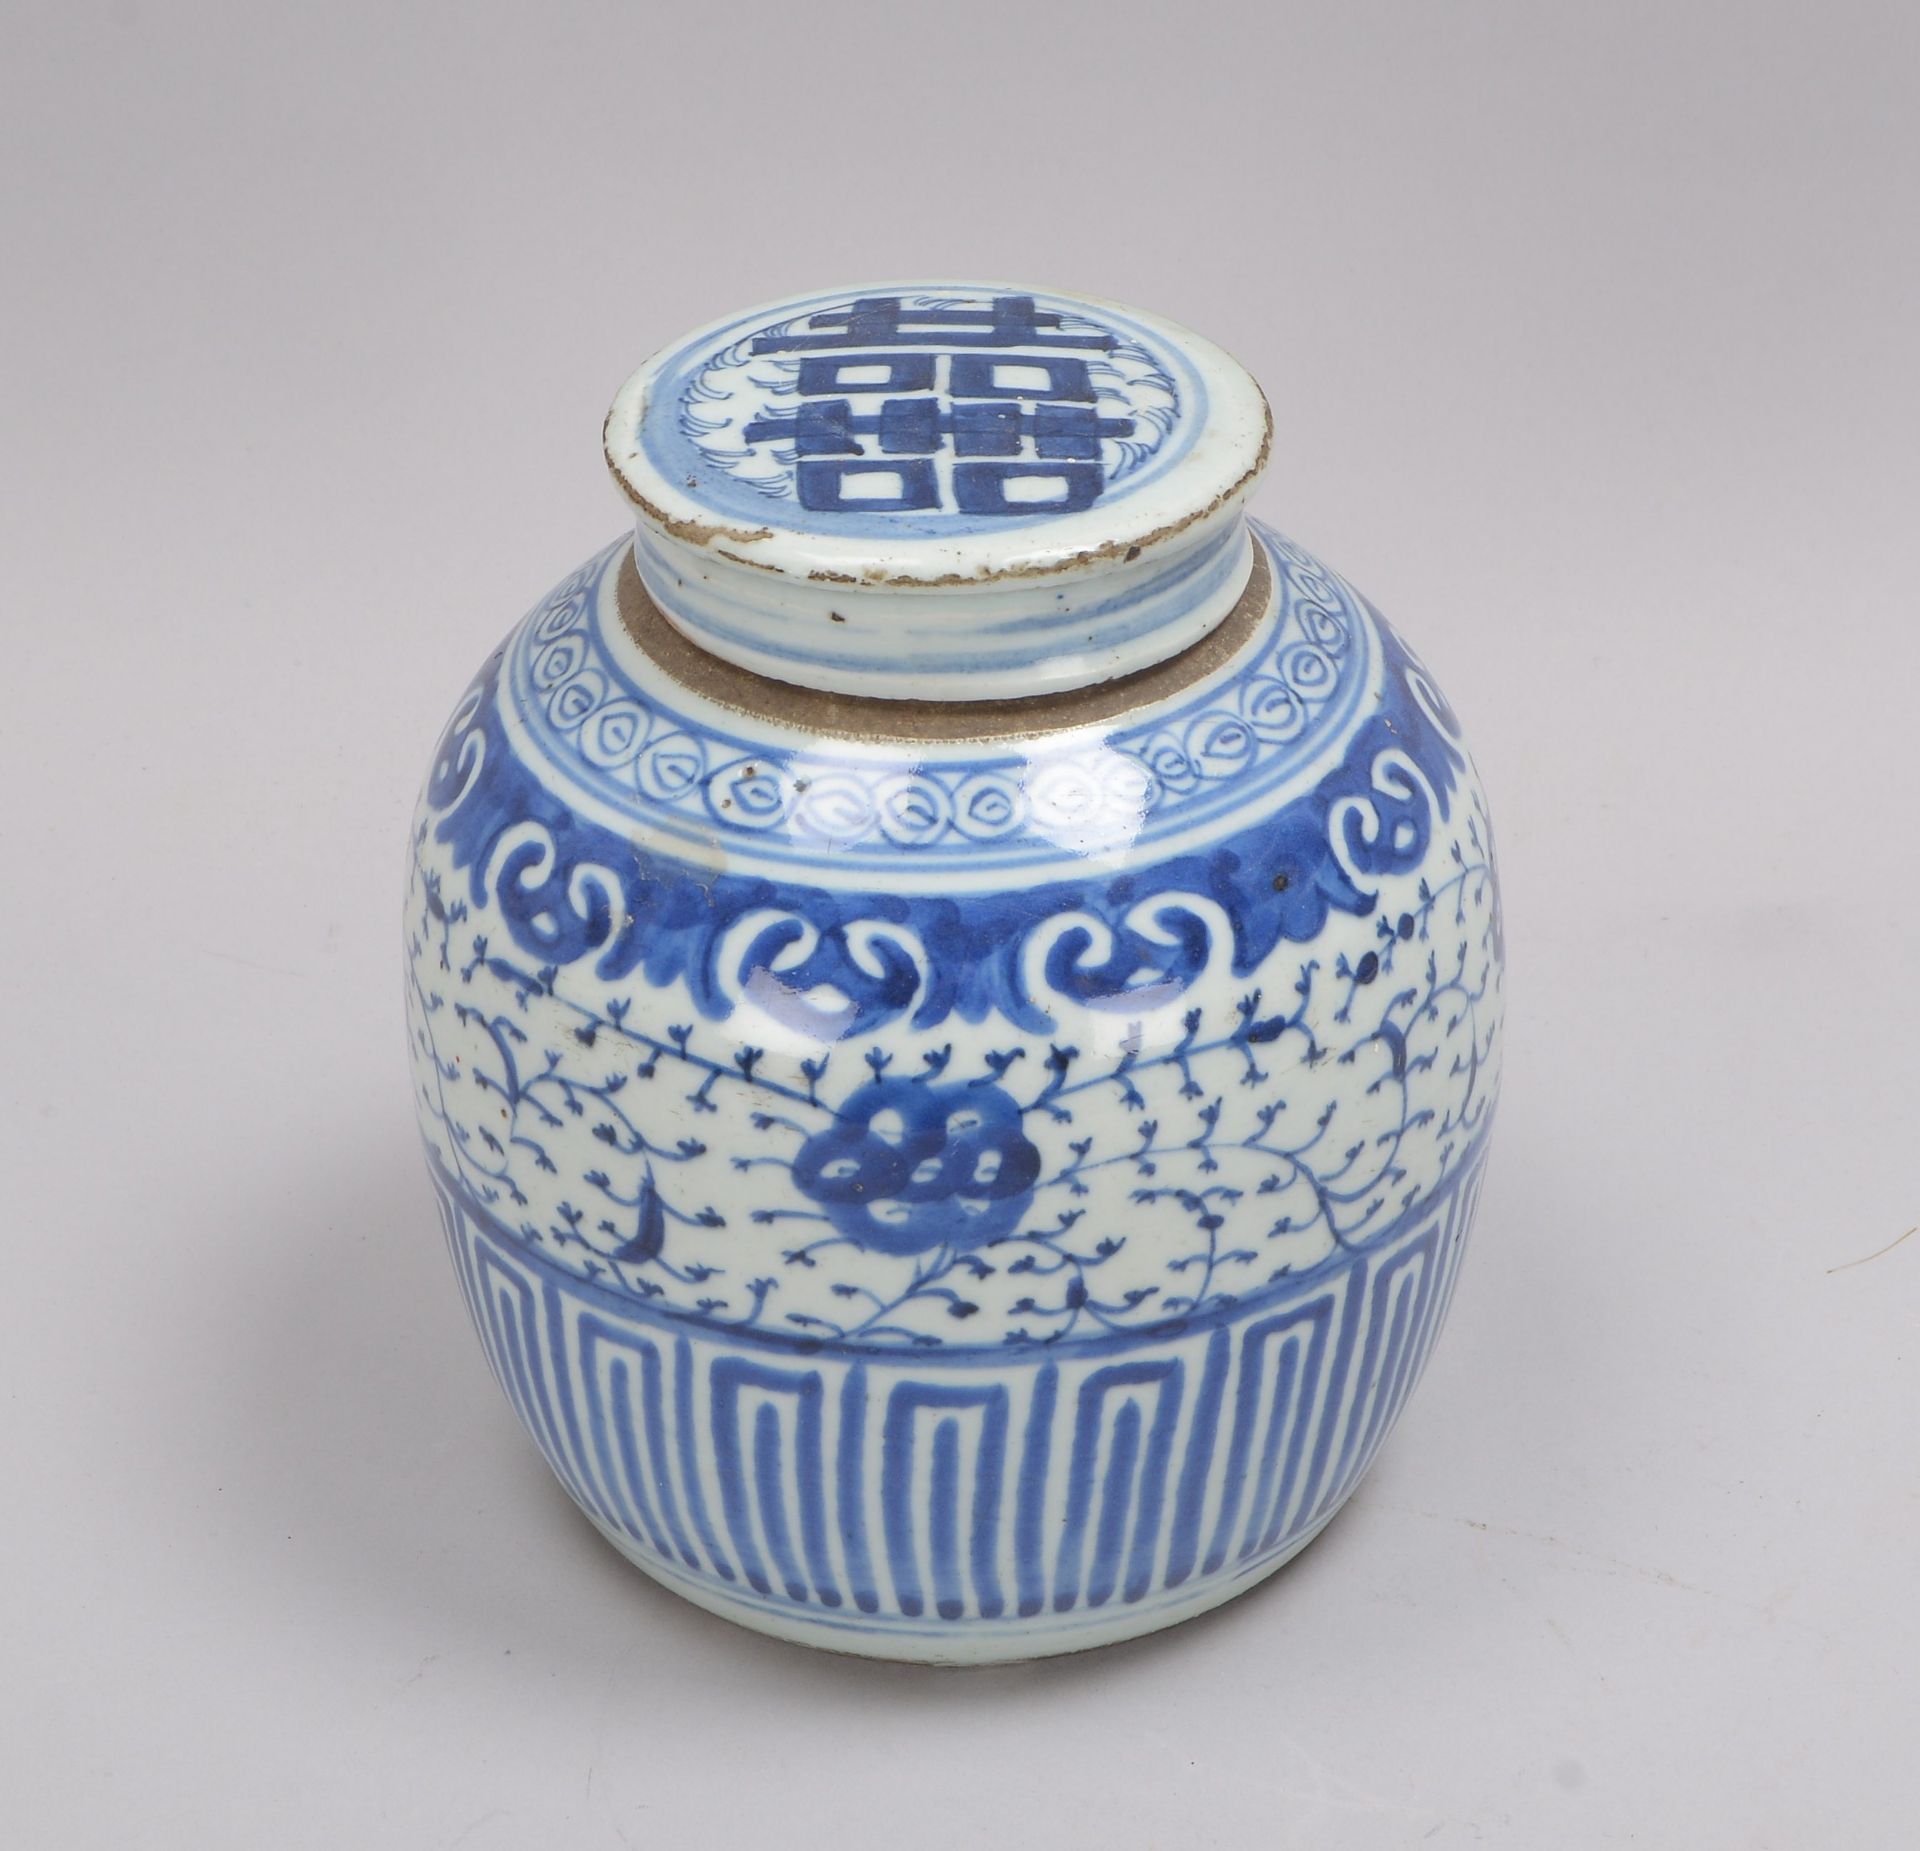 Ingwertopf (China), blaue Unterglasurmalerei, mit Deckel - Image 2 of 2